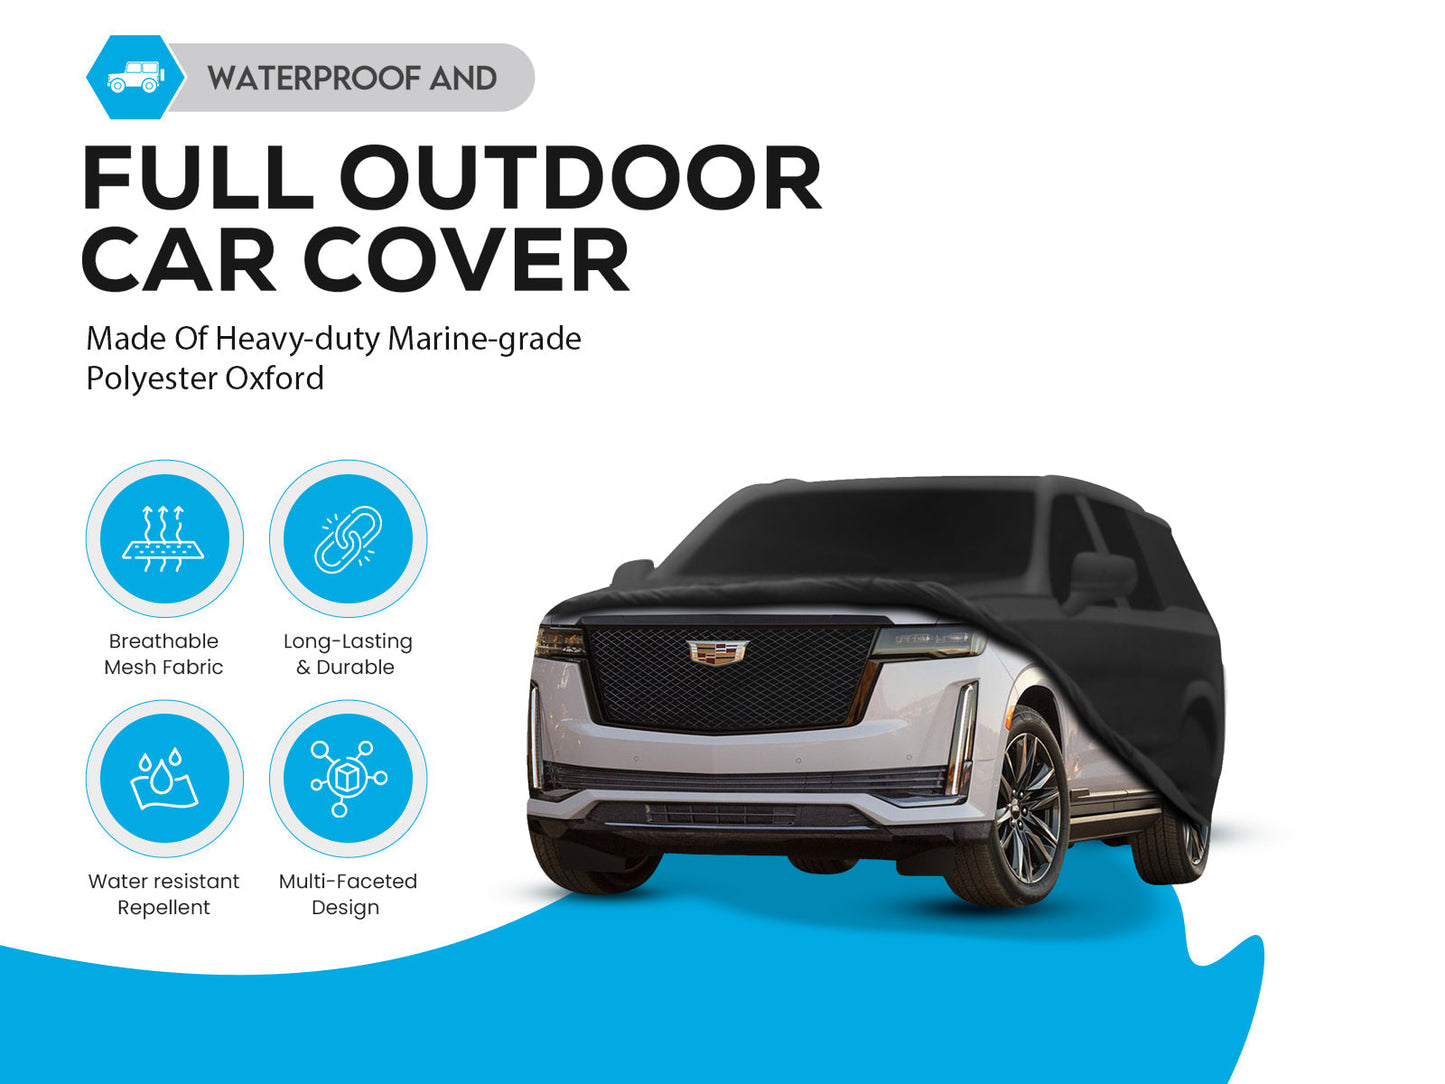 Premium car cover for Cadillac Escalade SWB standard wheel base Water Resistant UV Rays Hail Protection Storage Winter Snow (semi-custom)